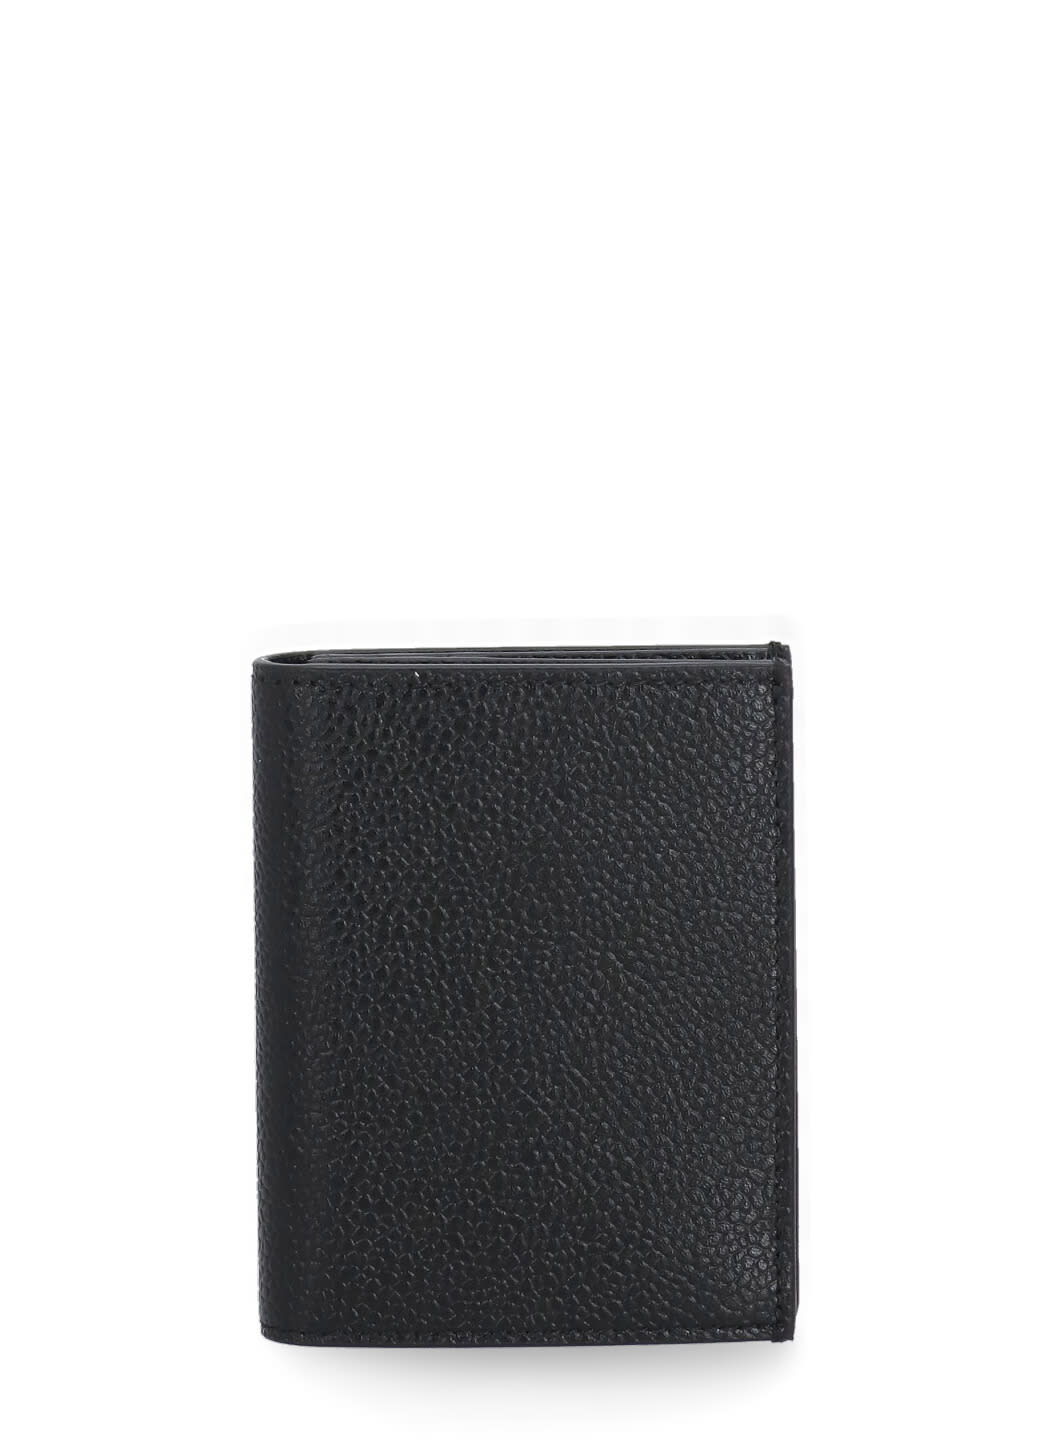 Thom Browne Pebble Leather Card Holder